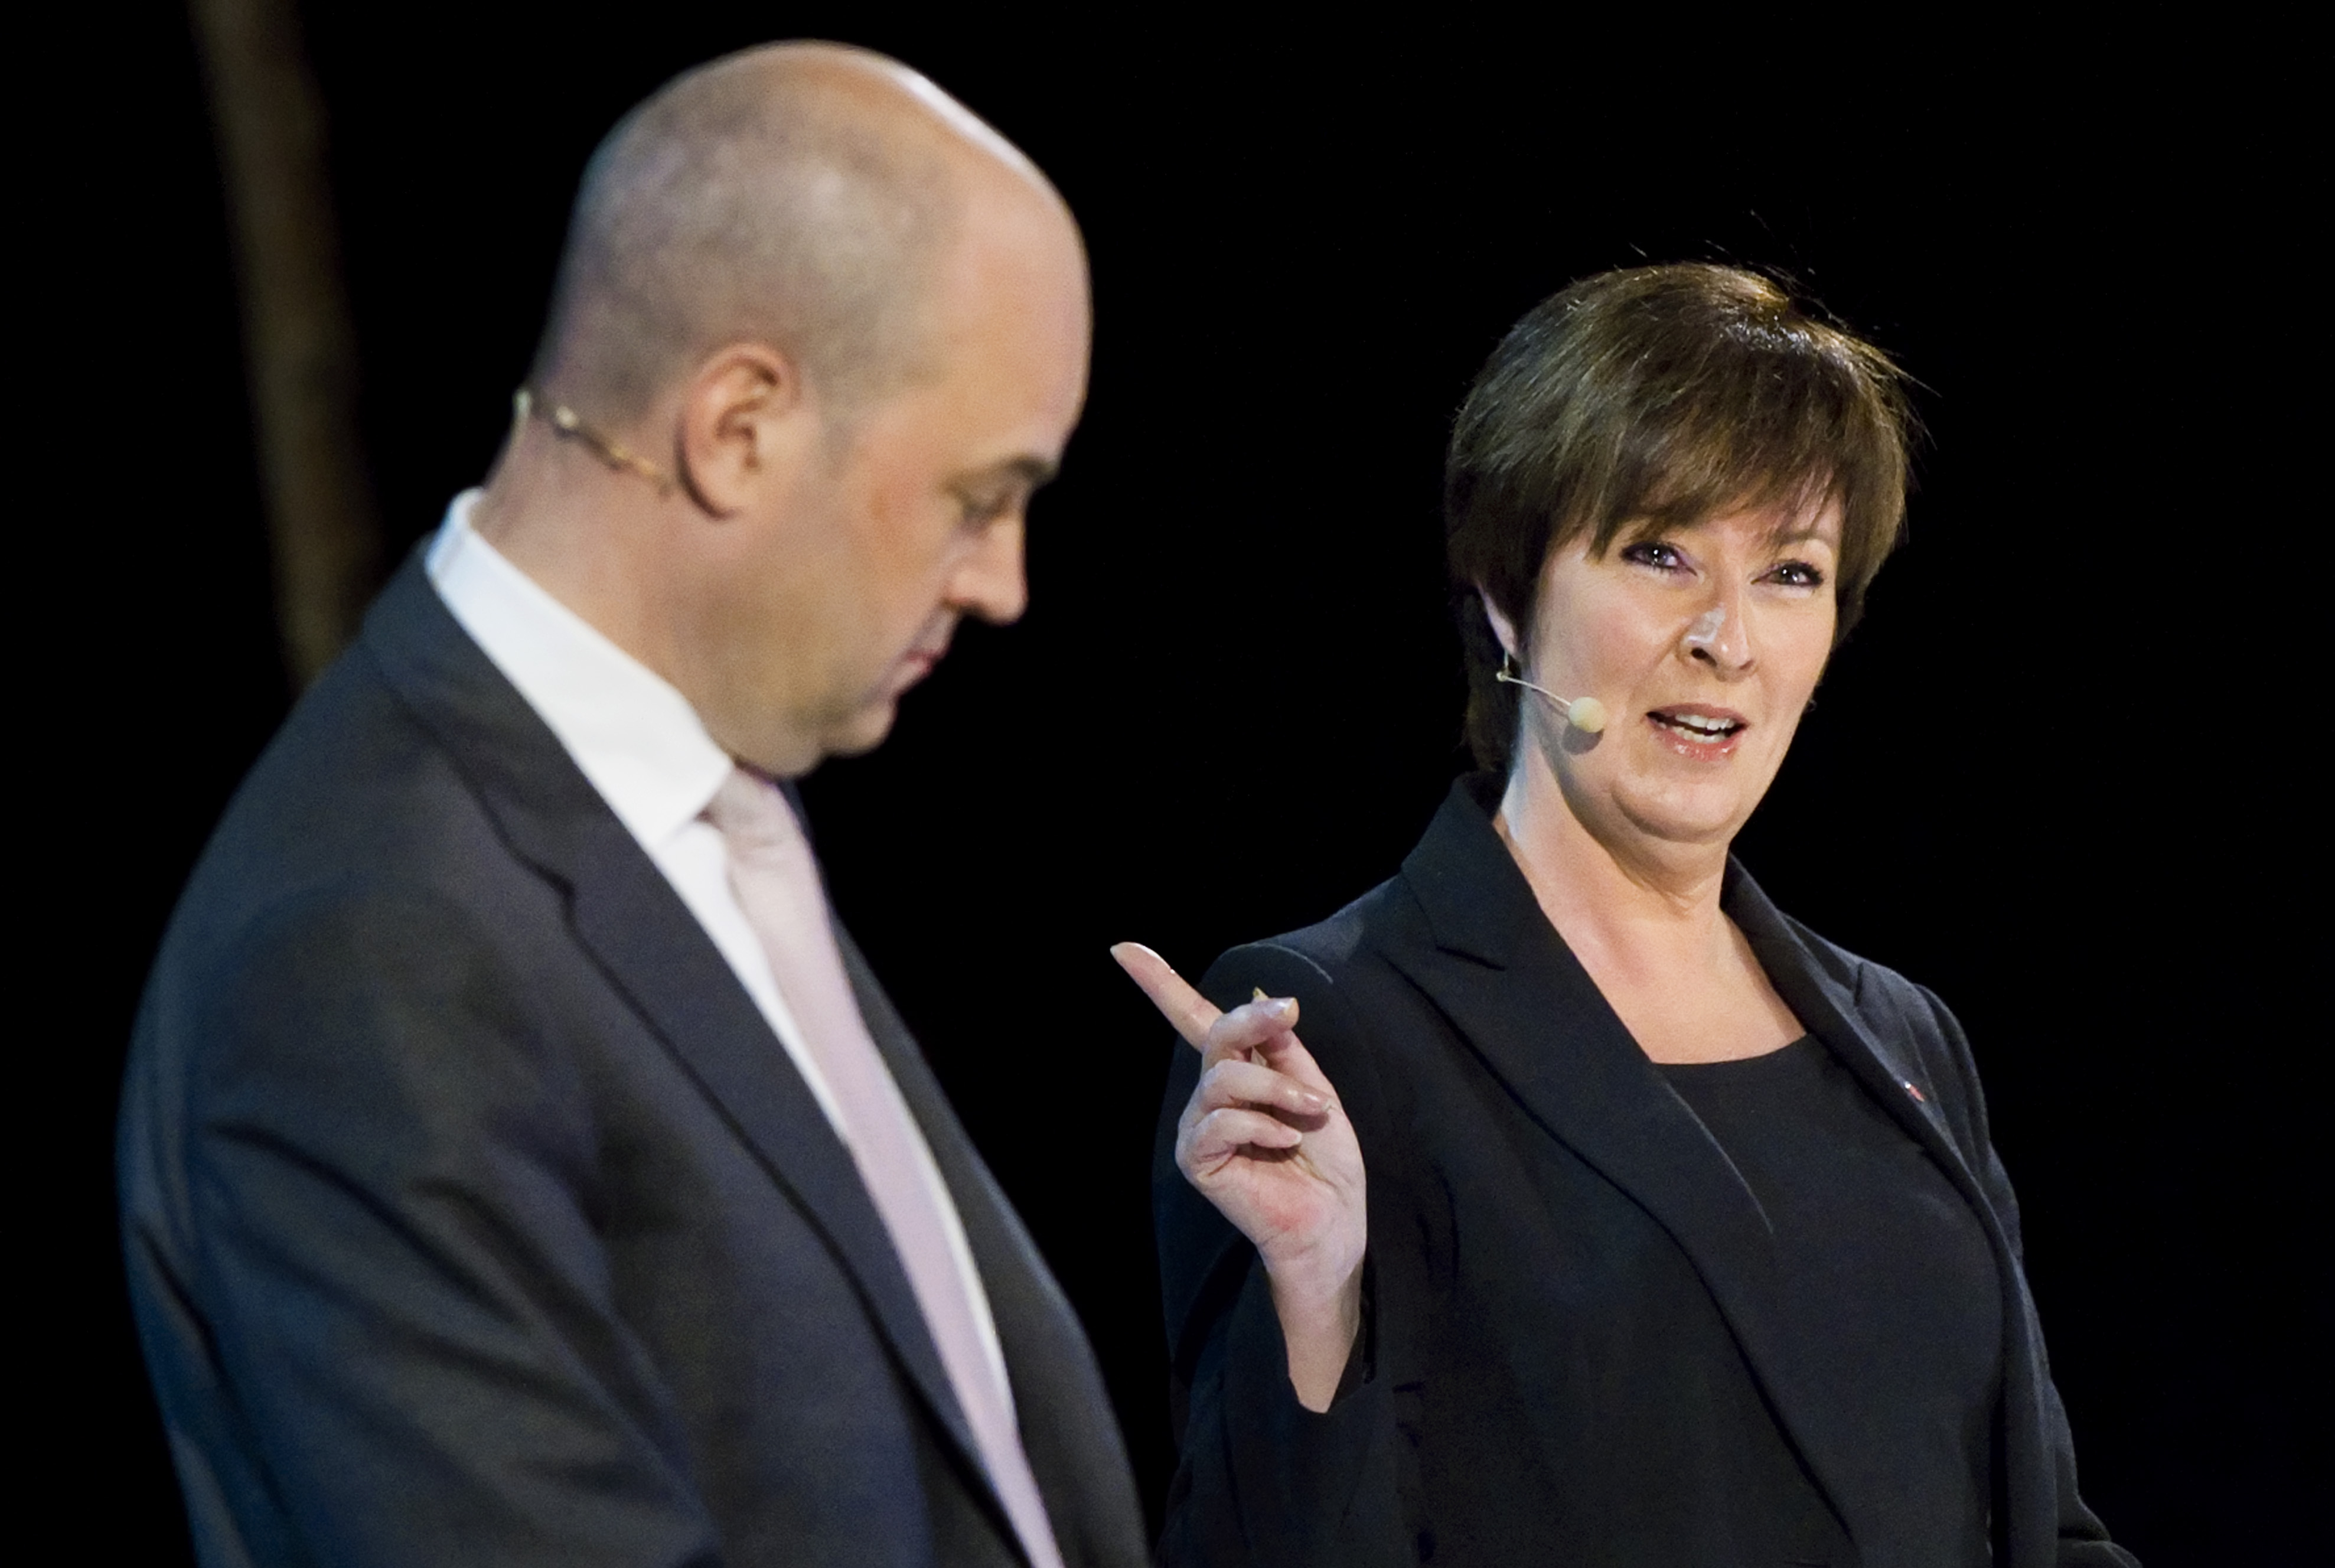 Riksdagsvalet 2010, Fredrik Reinfeldt, Partiledardebatt, Mona Sahlin